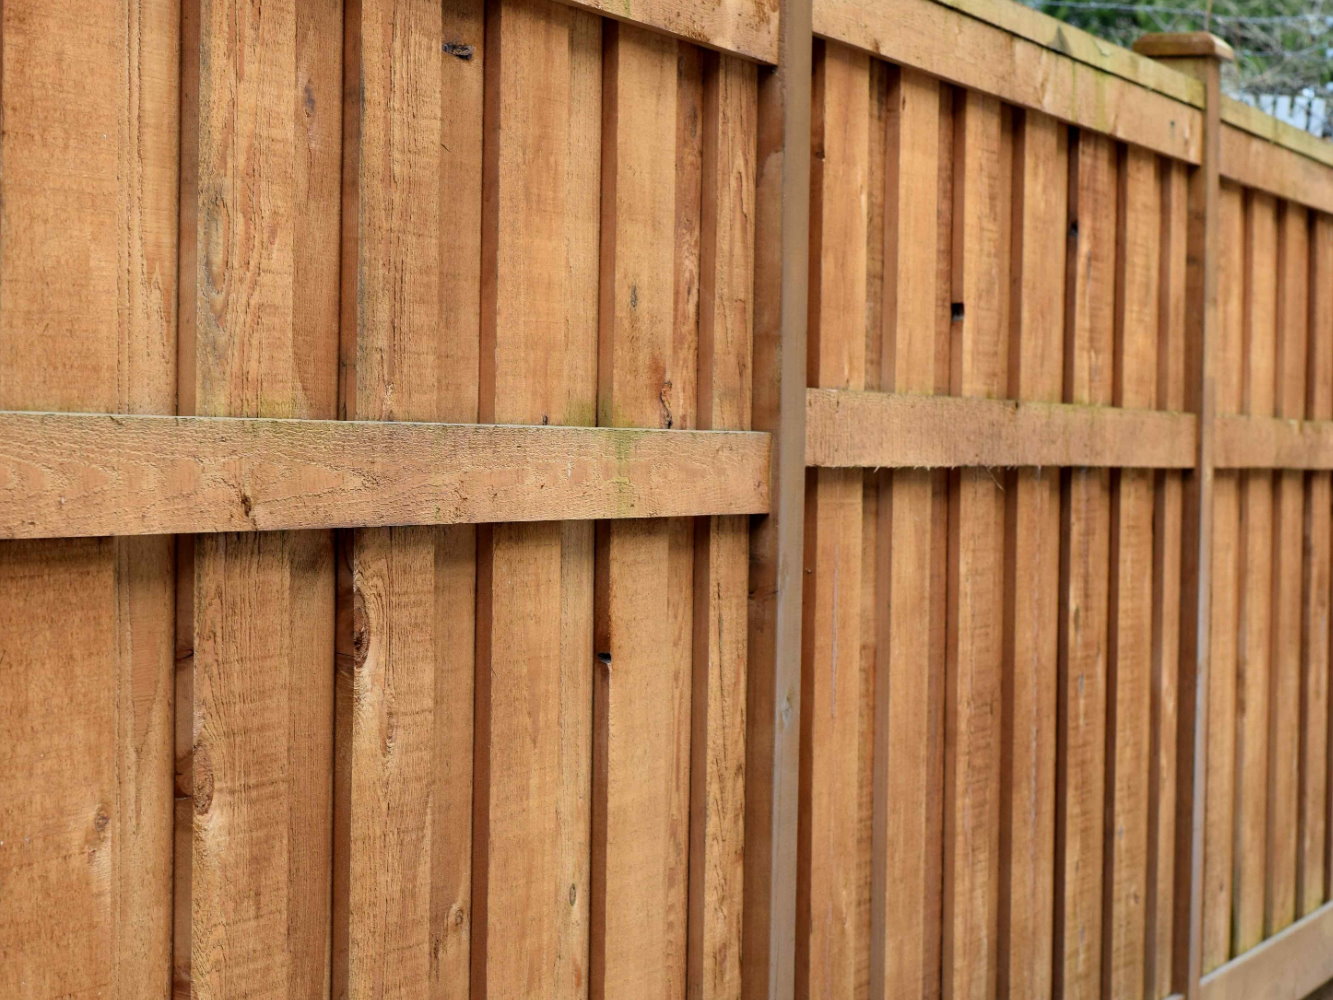 Newburgh IN Shadowbox style wood fence